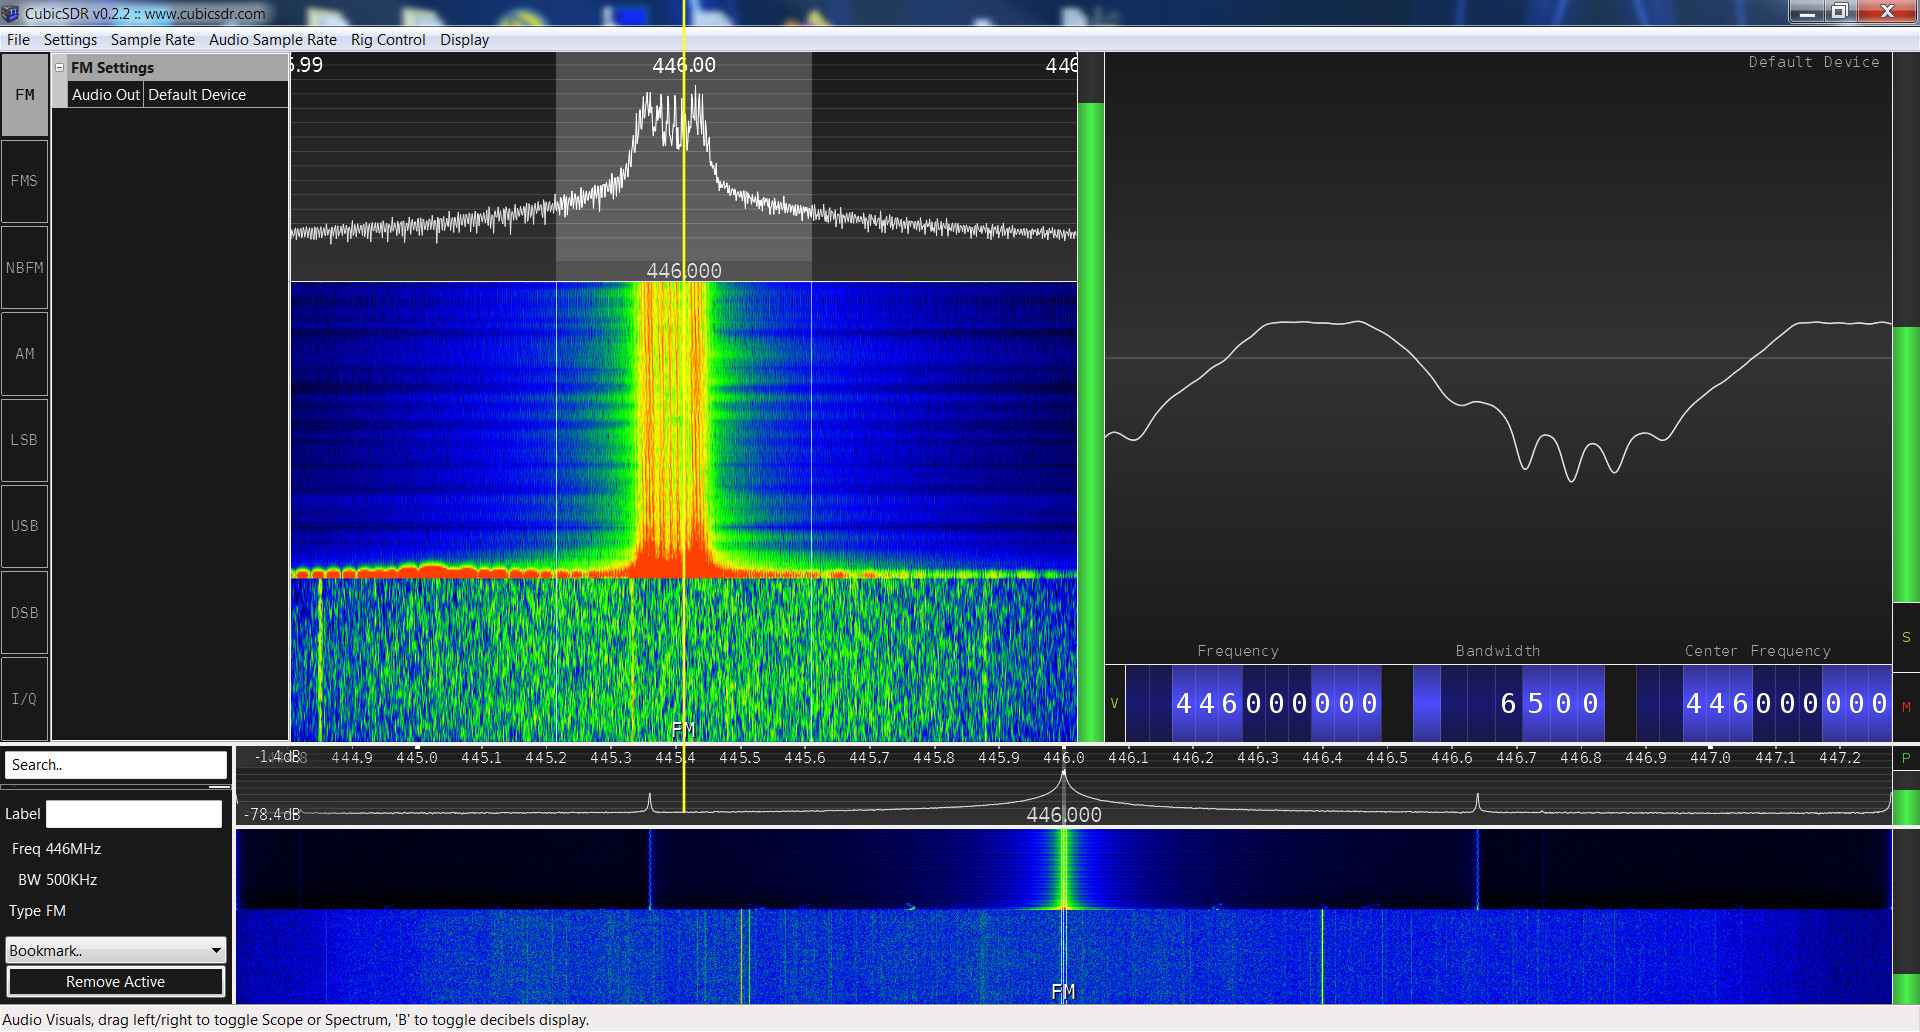  SRD spectrum analysis